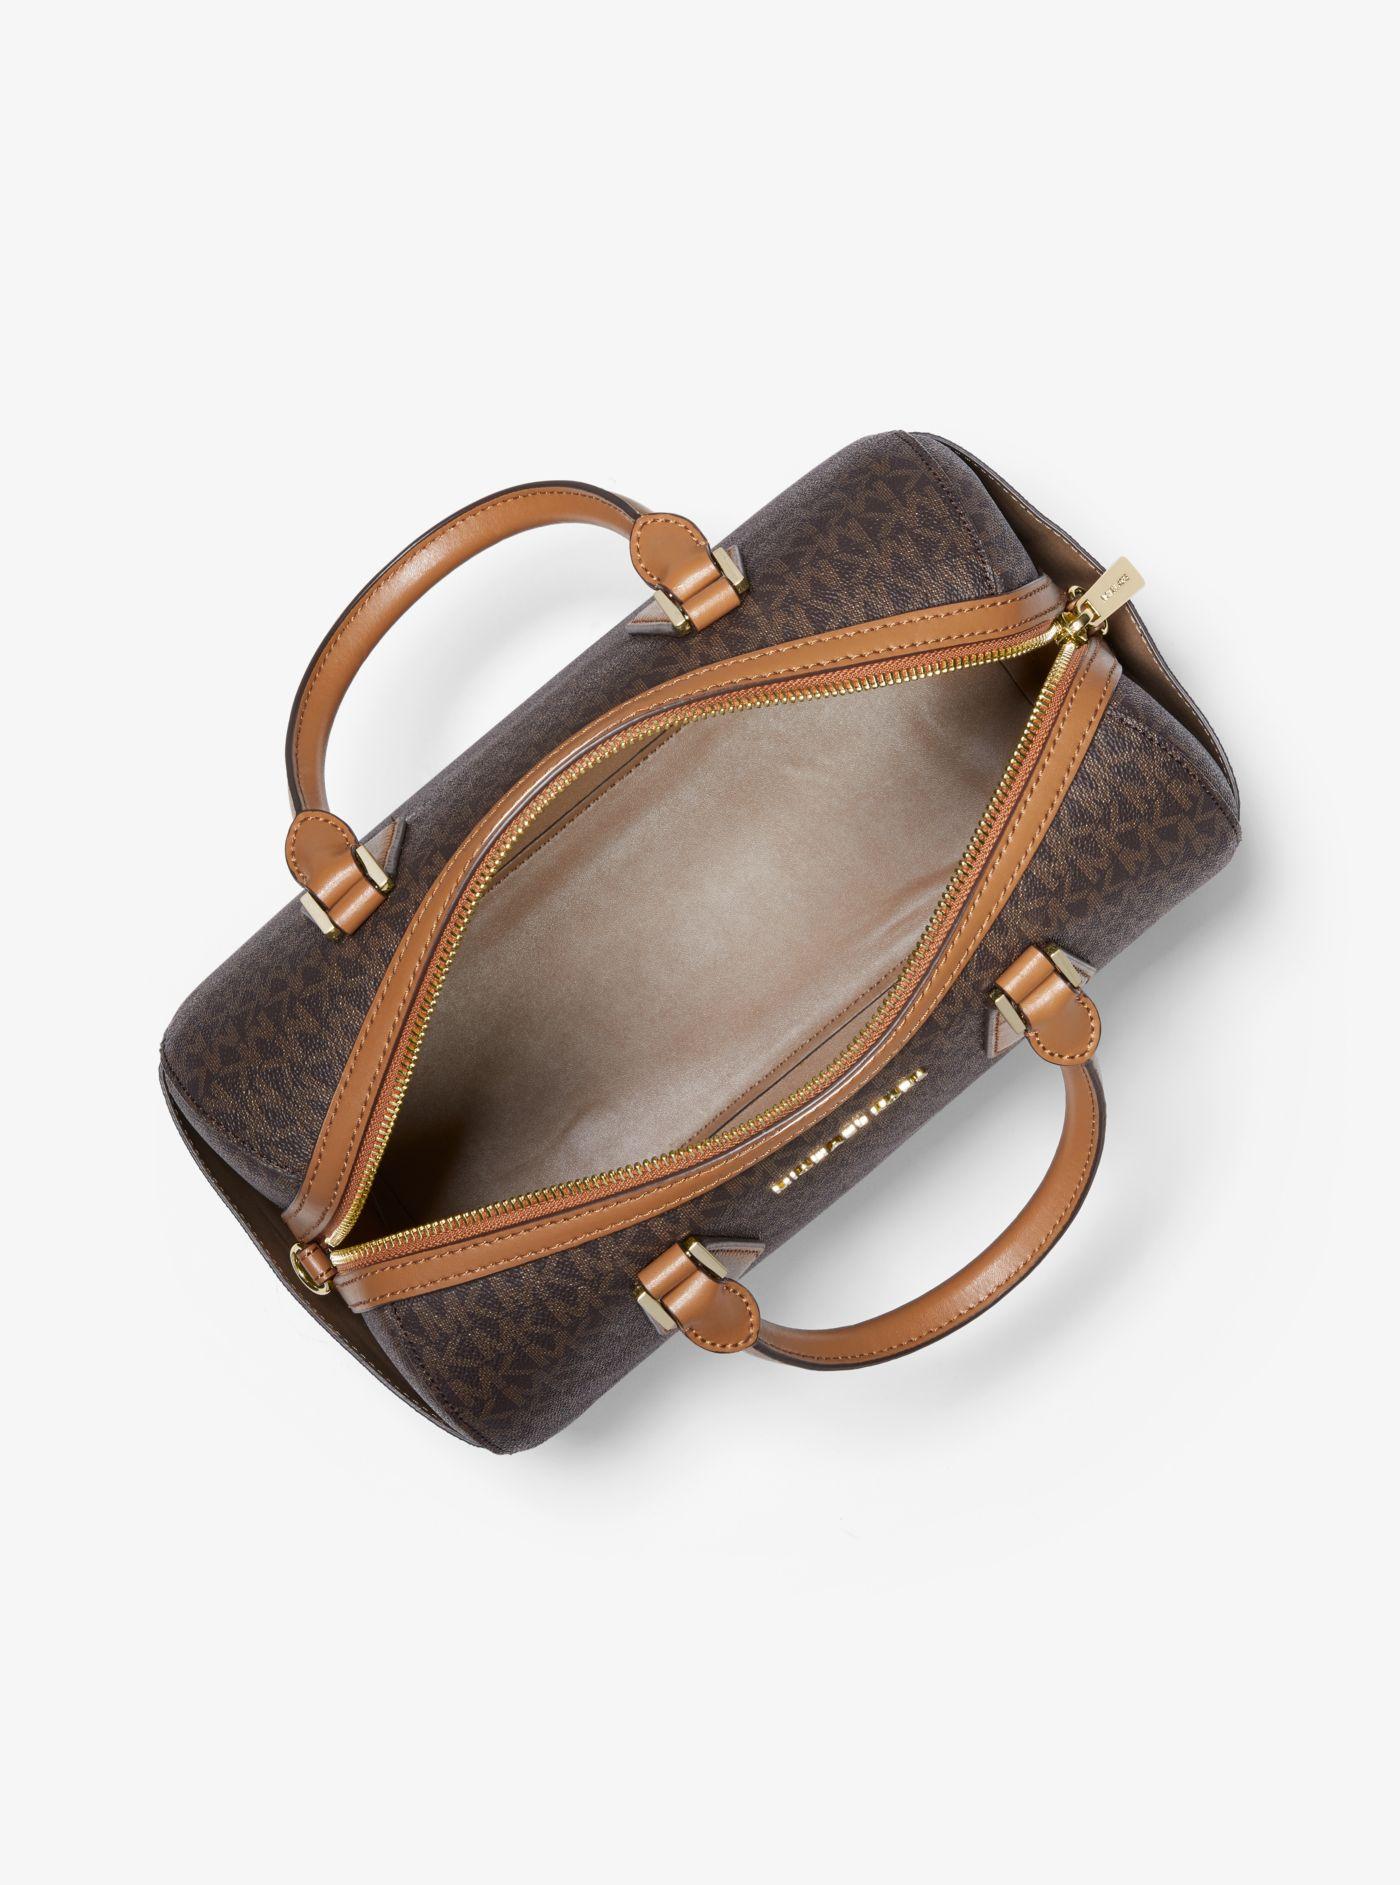 michael kors hayes large saffiano leather satchel